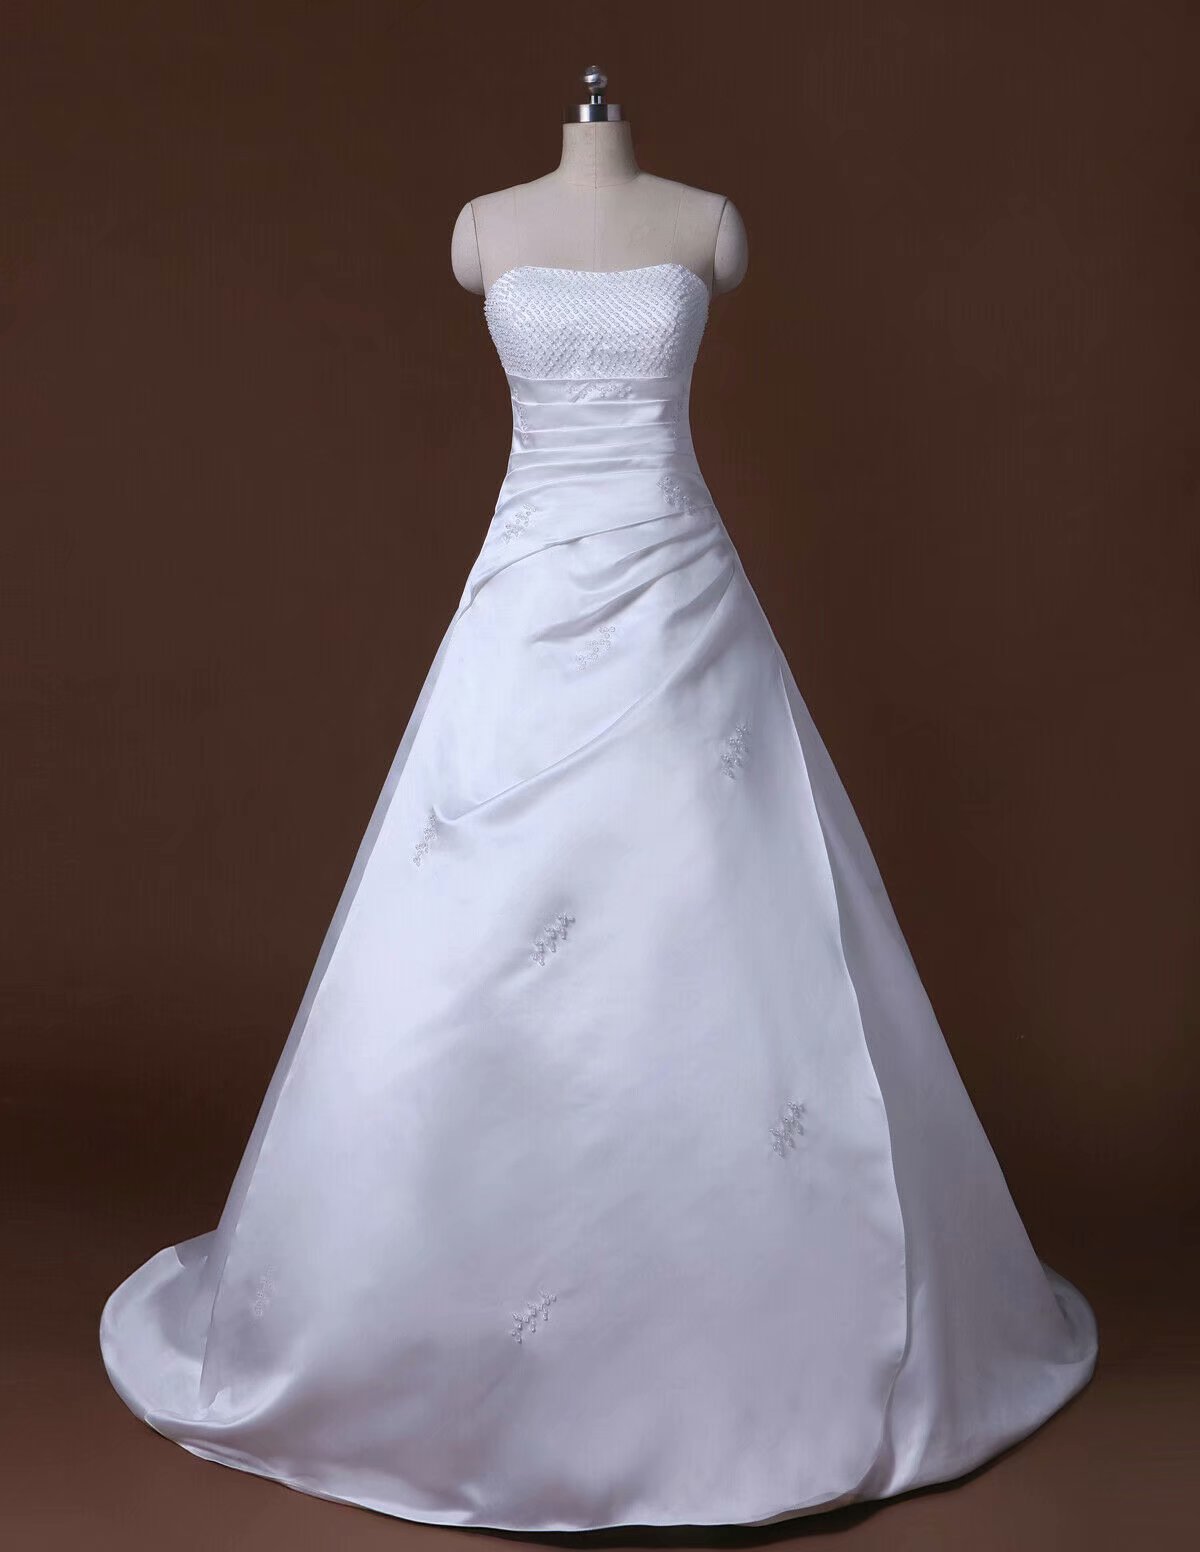 White Wedding Dress, Strapless Wedding Dress, 2019 Wedding Dresses, Wedding Dress, Chapel Train Wedding Dress, Satin Wedding Dress, Real Photo